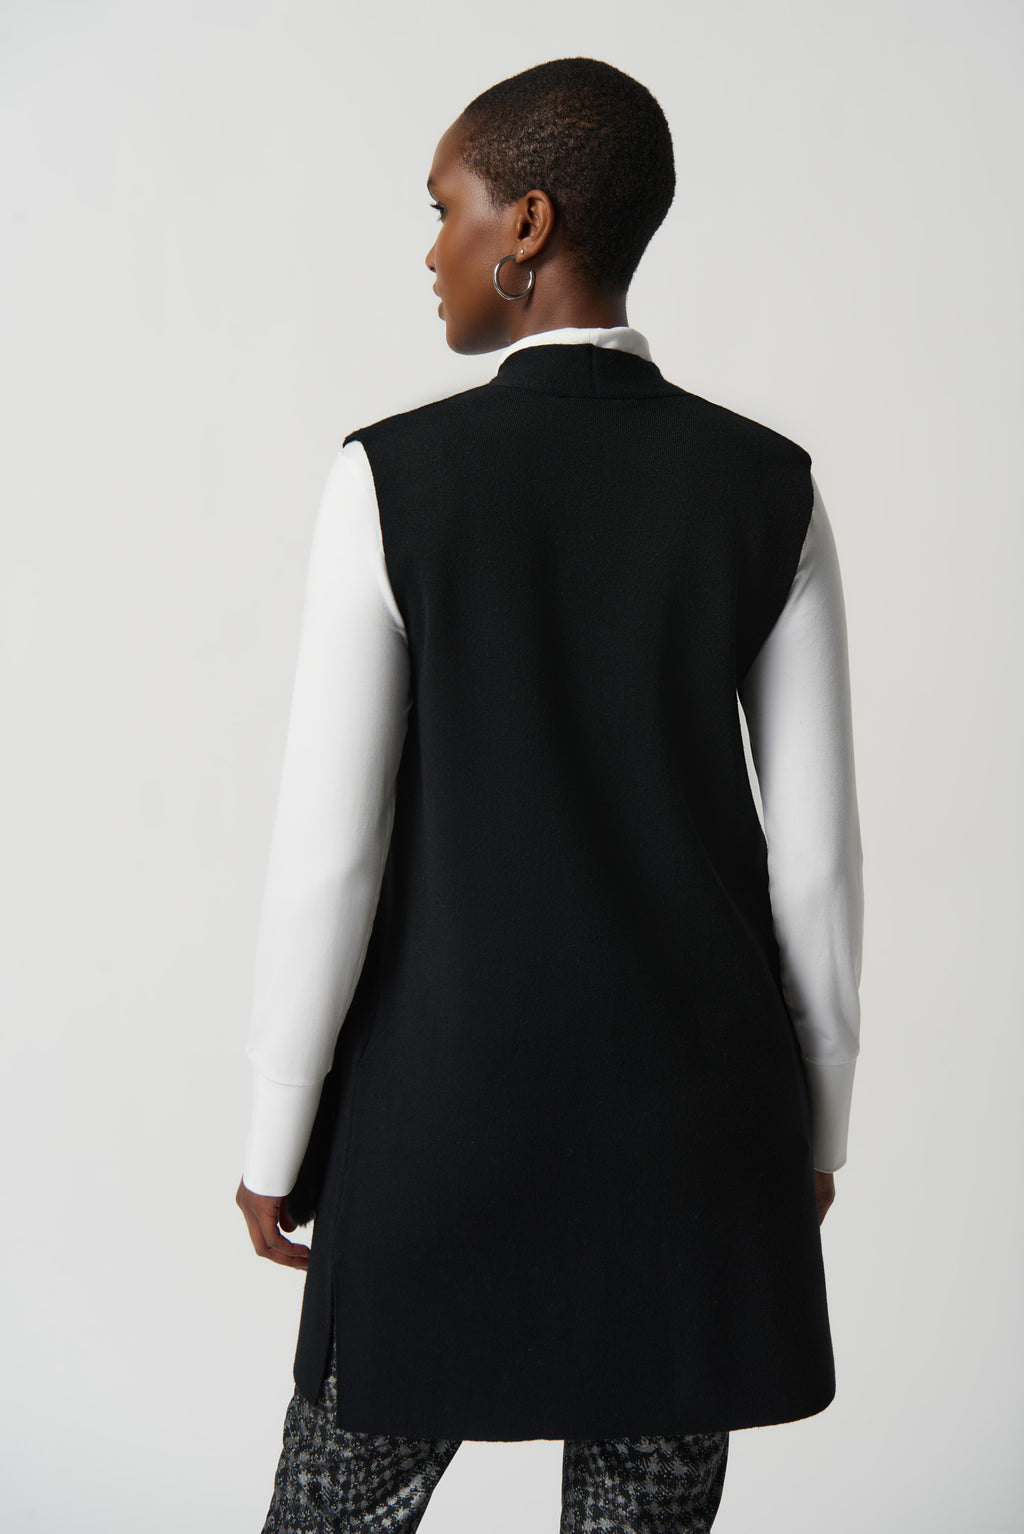 Joseph Ribkoff Black Sweater Knit And Faux Fur Vest Style 234912